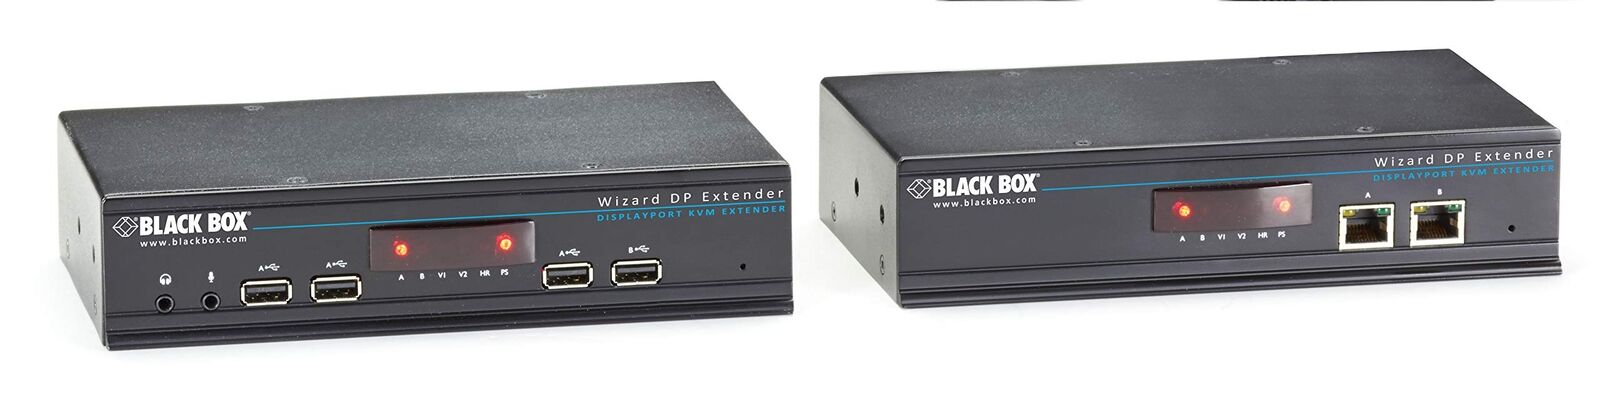 Black Box Corporation Dual-Head Displayport Kvm Extender Over Catx